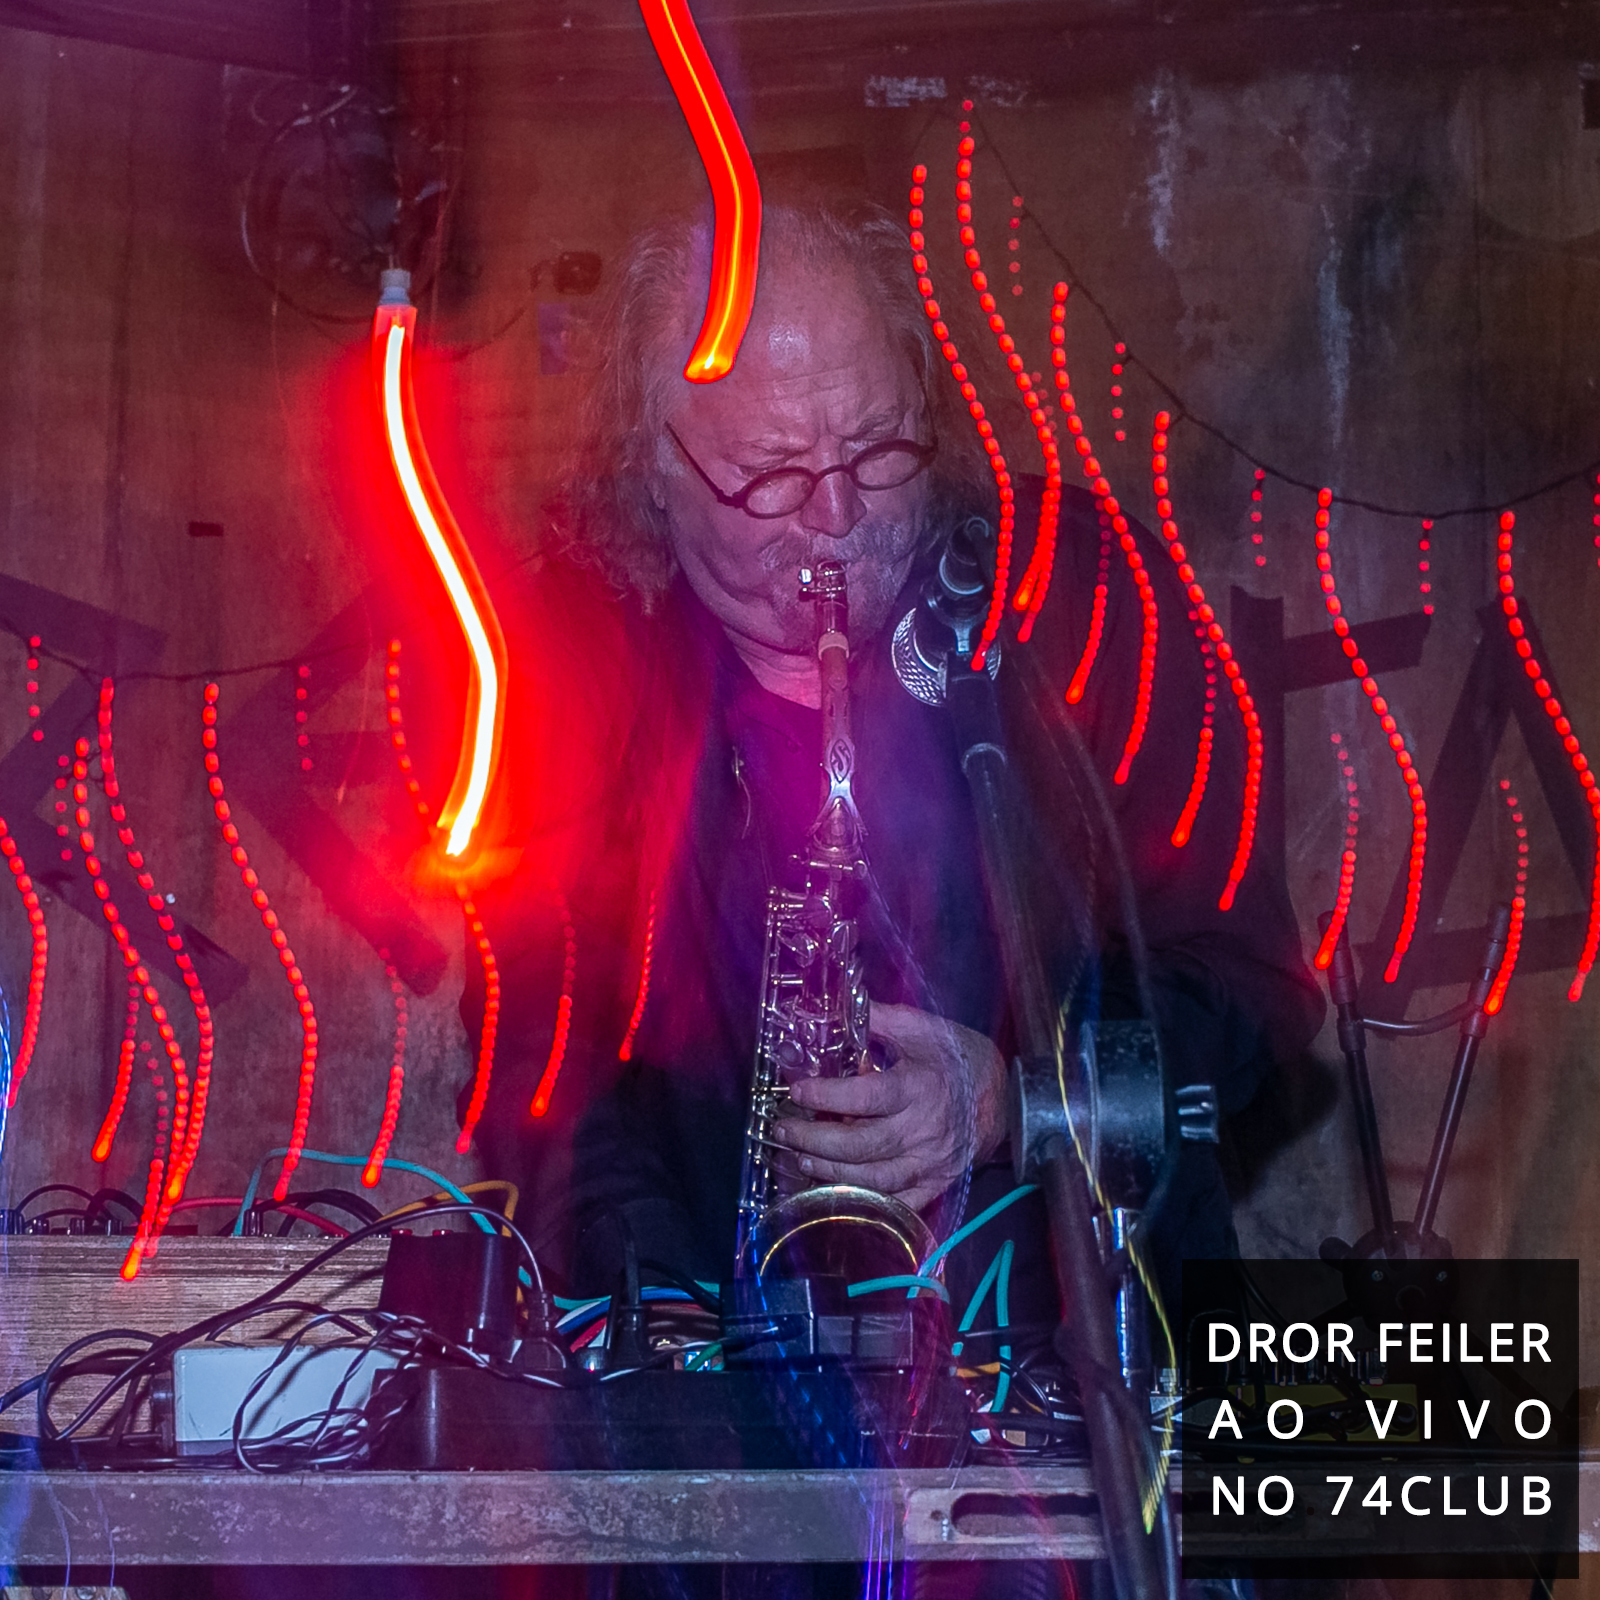 Dror Feiler ‘Ao vivo no 74 Club’